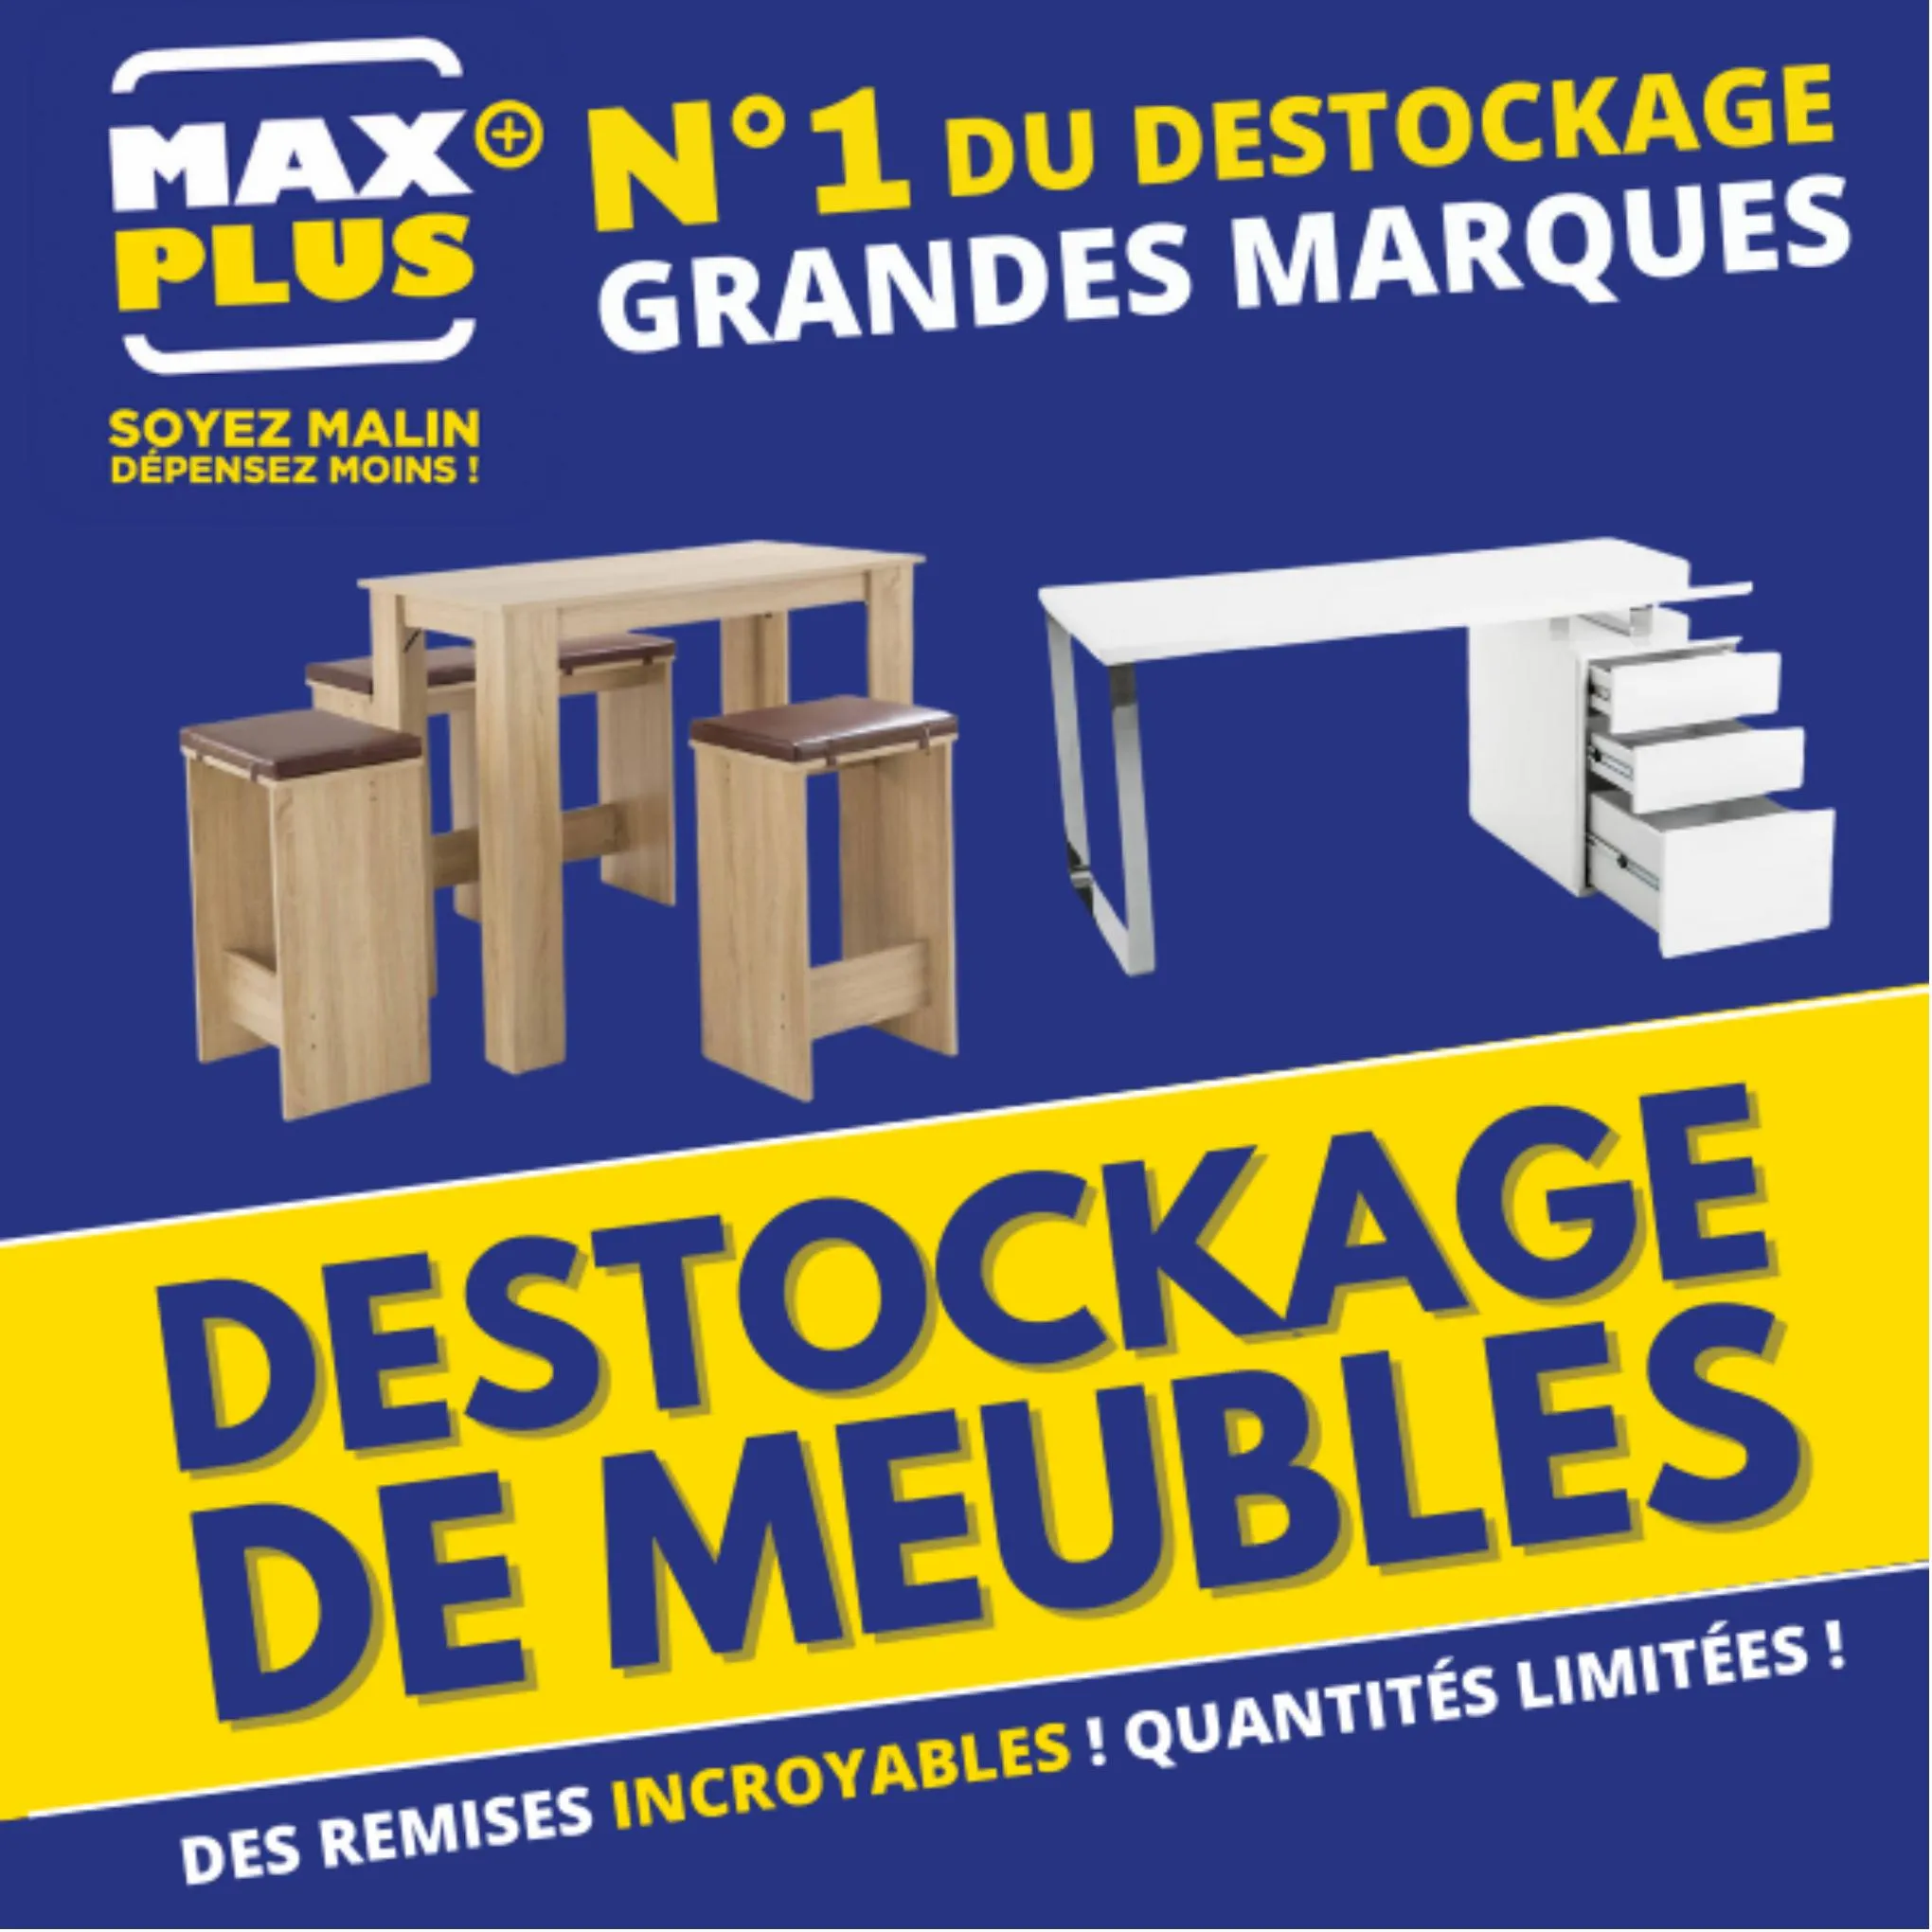 Catalogue Destockage de Meubles, page 00001